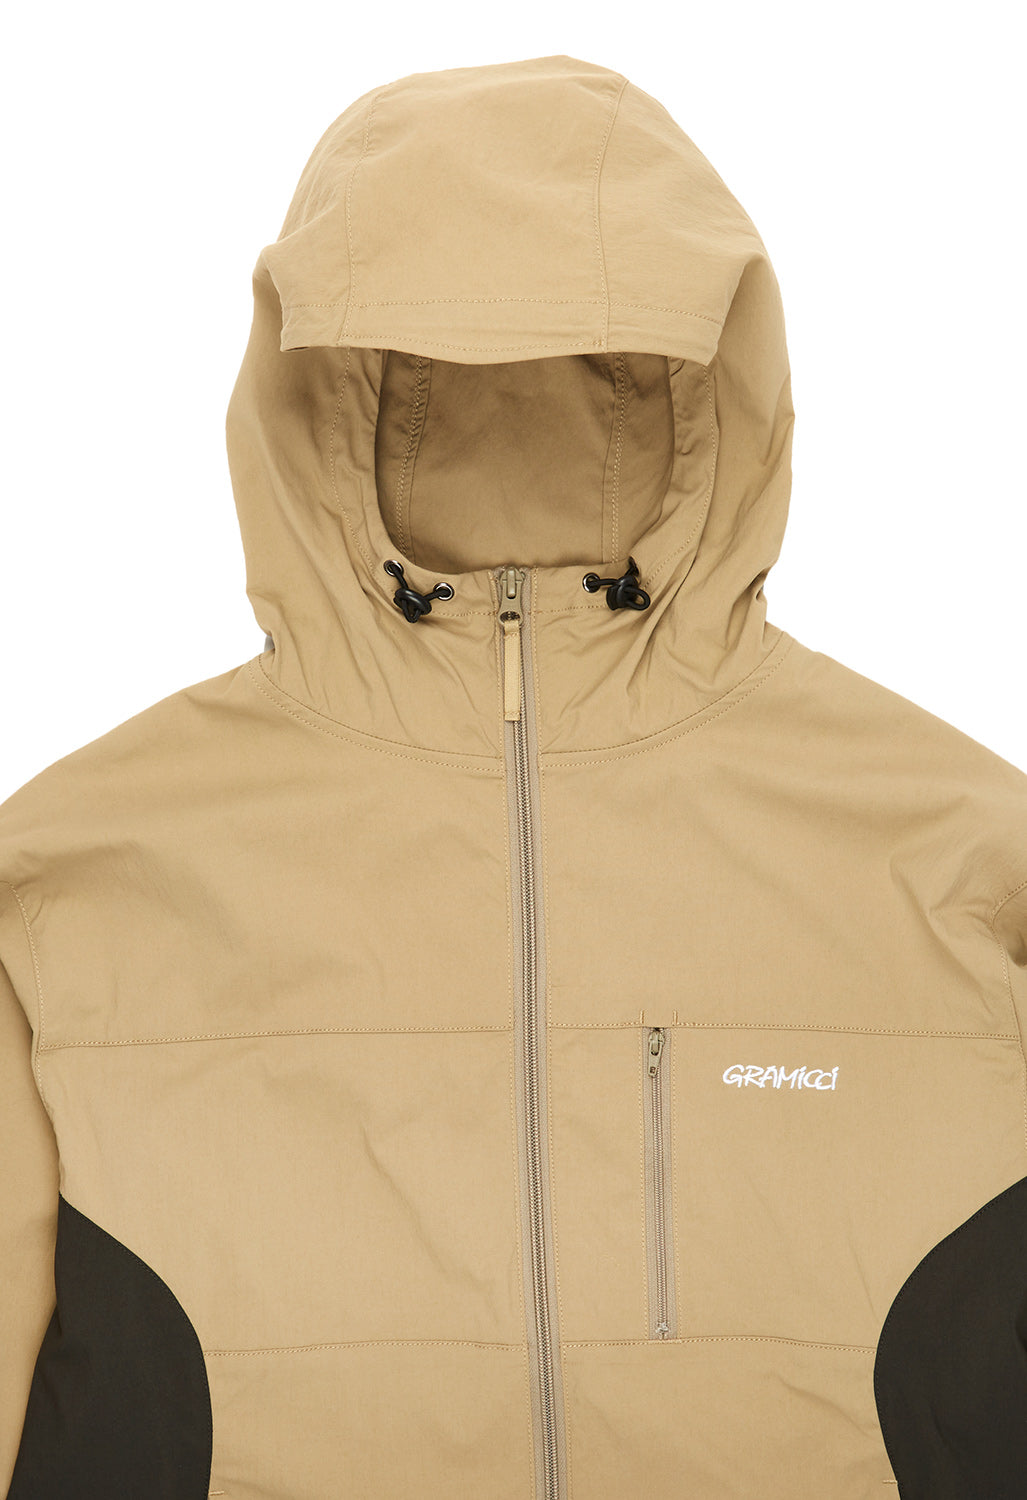 Gramicci Men's Softshell Nylon Hooded Jacket - Taupe